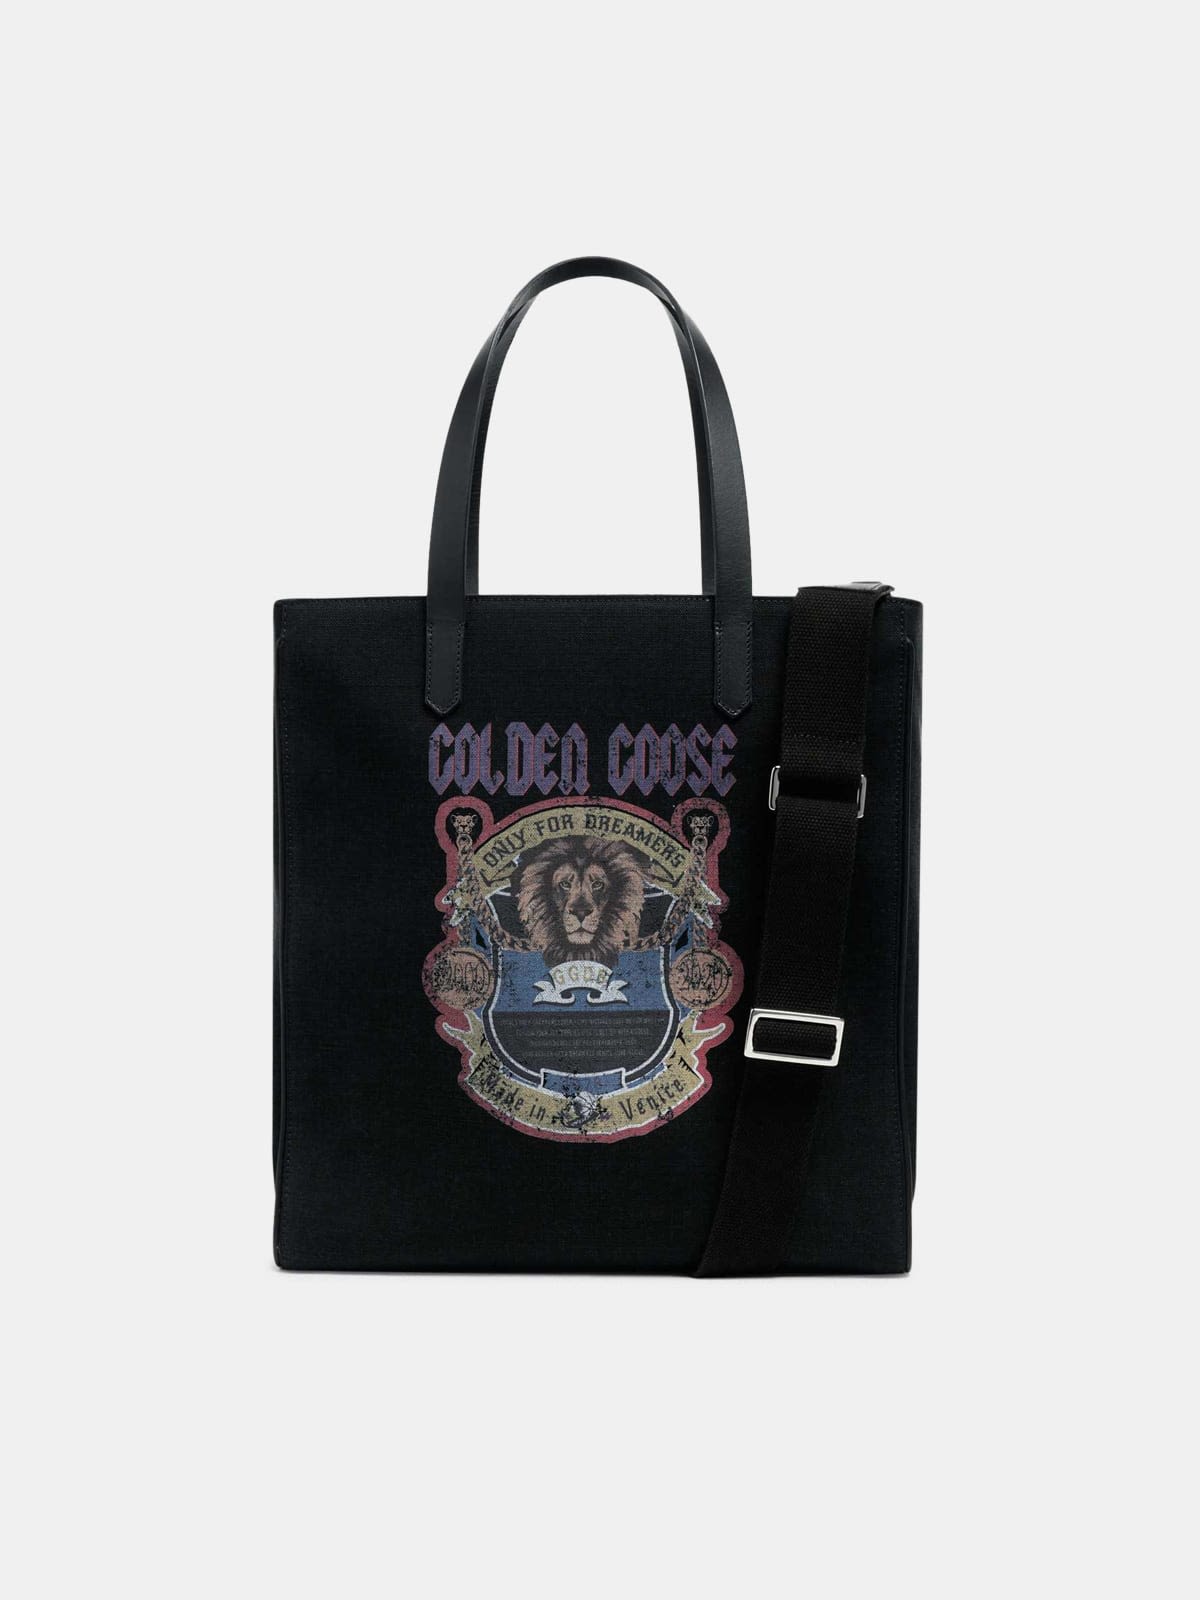 Black California North-South bag with vintage print